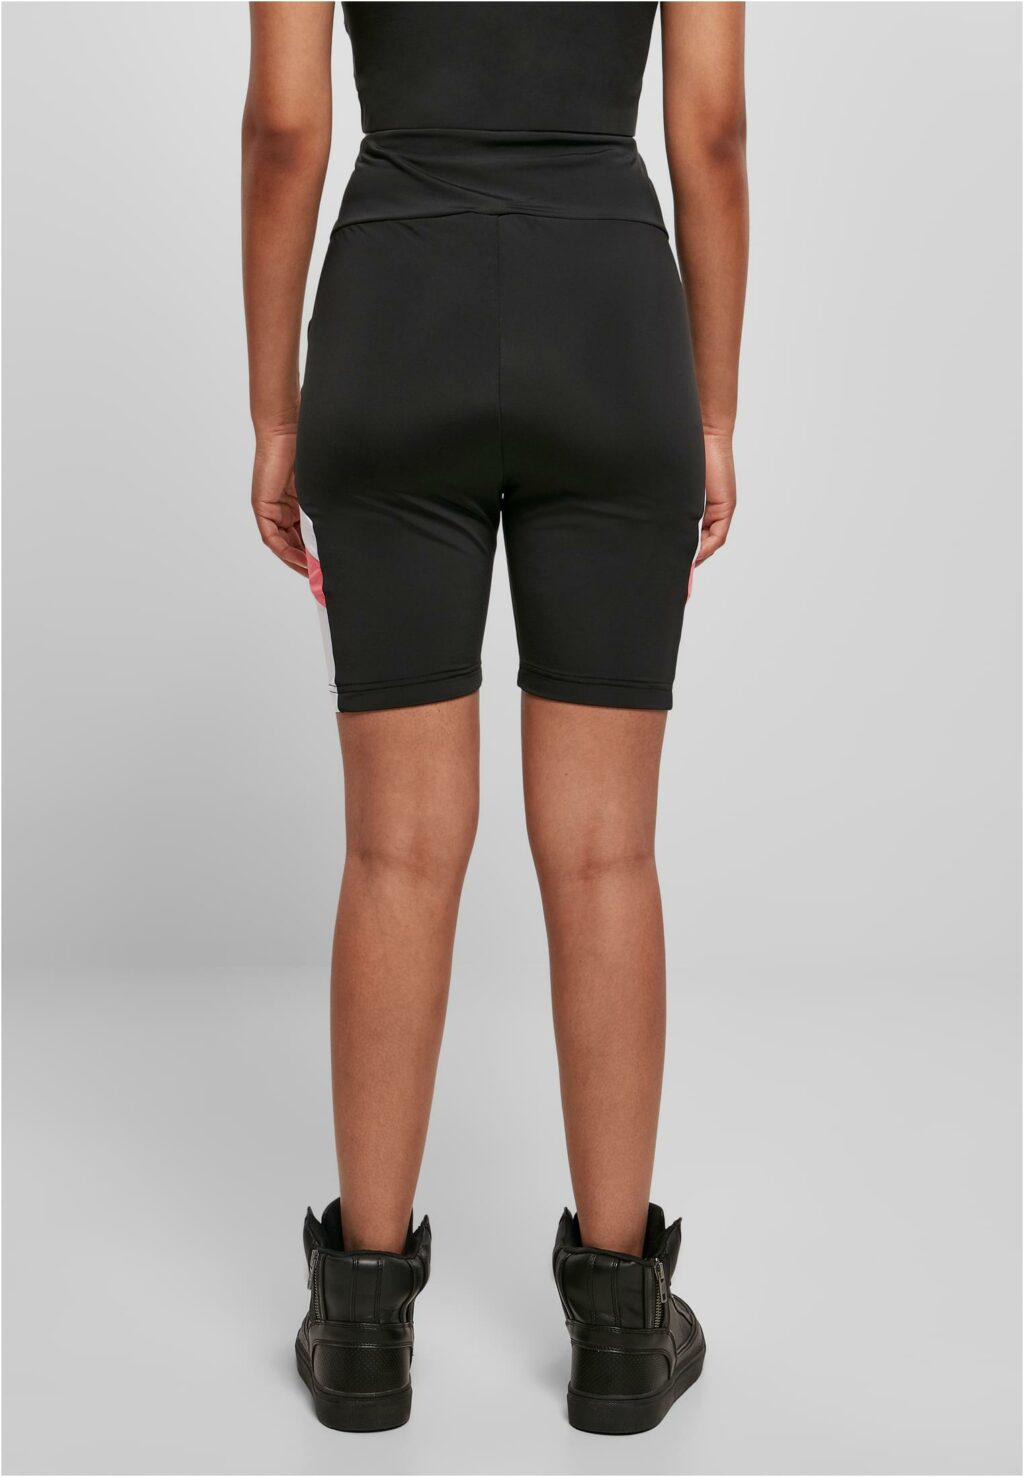 Ladies Starter Cycle Shorts black/white ST236